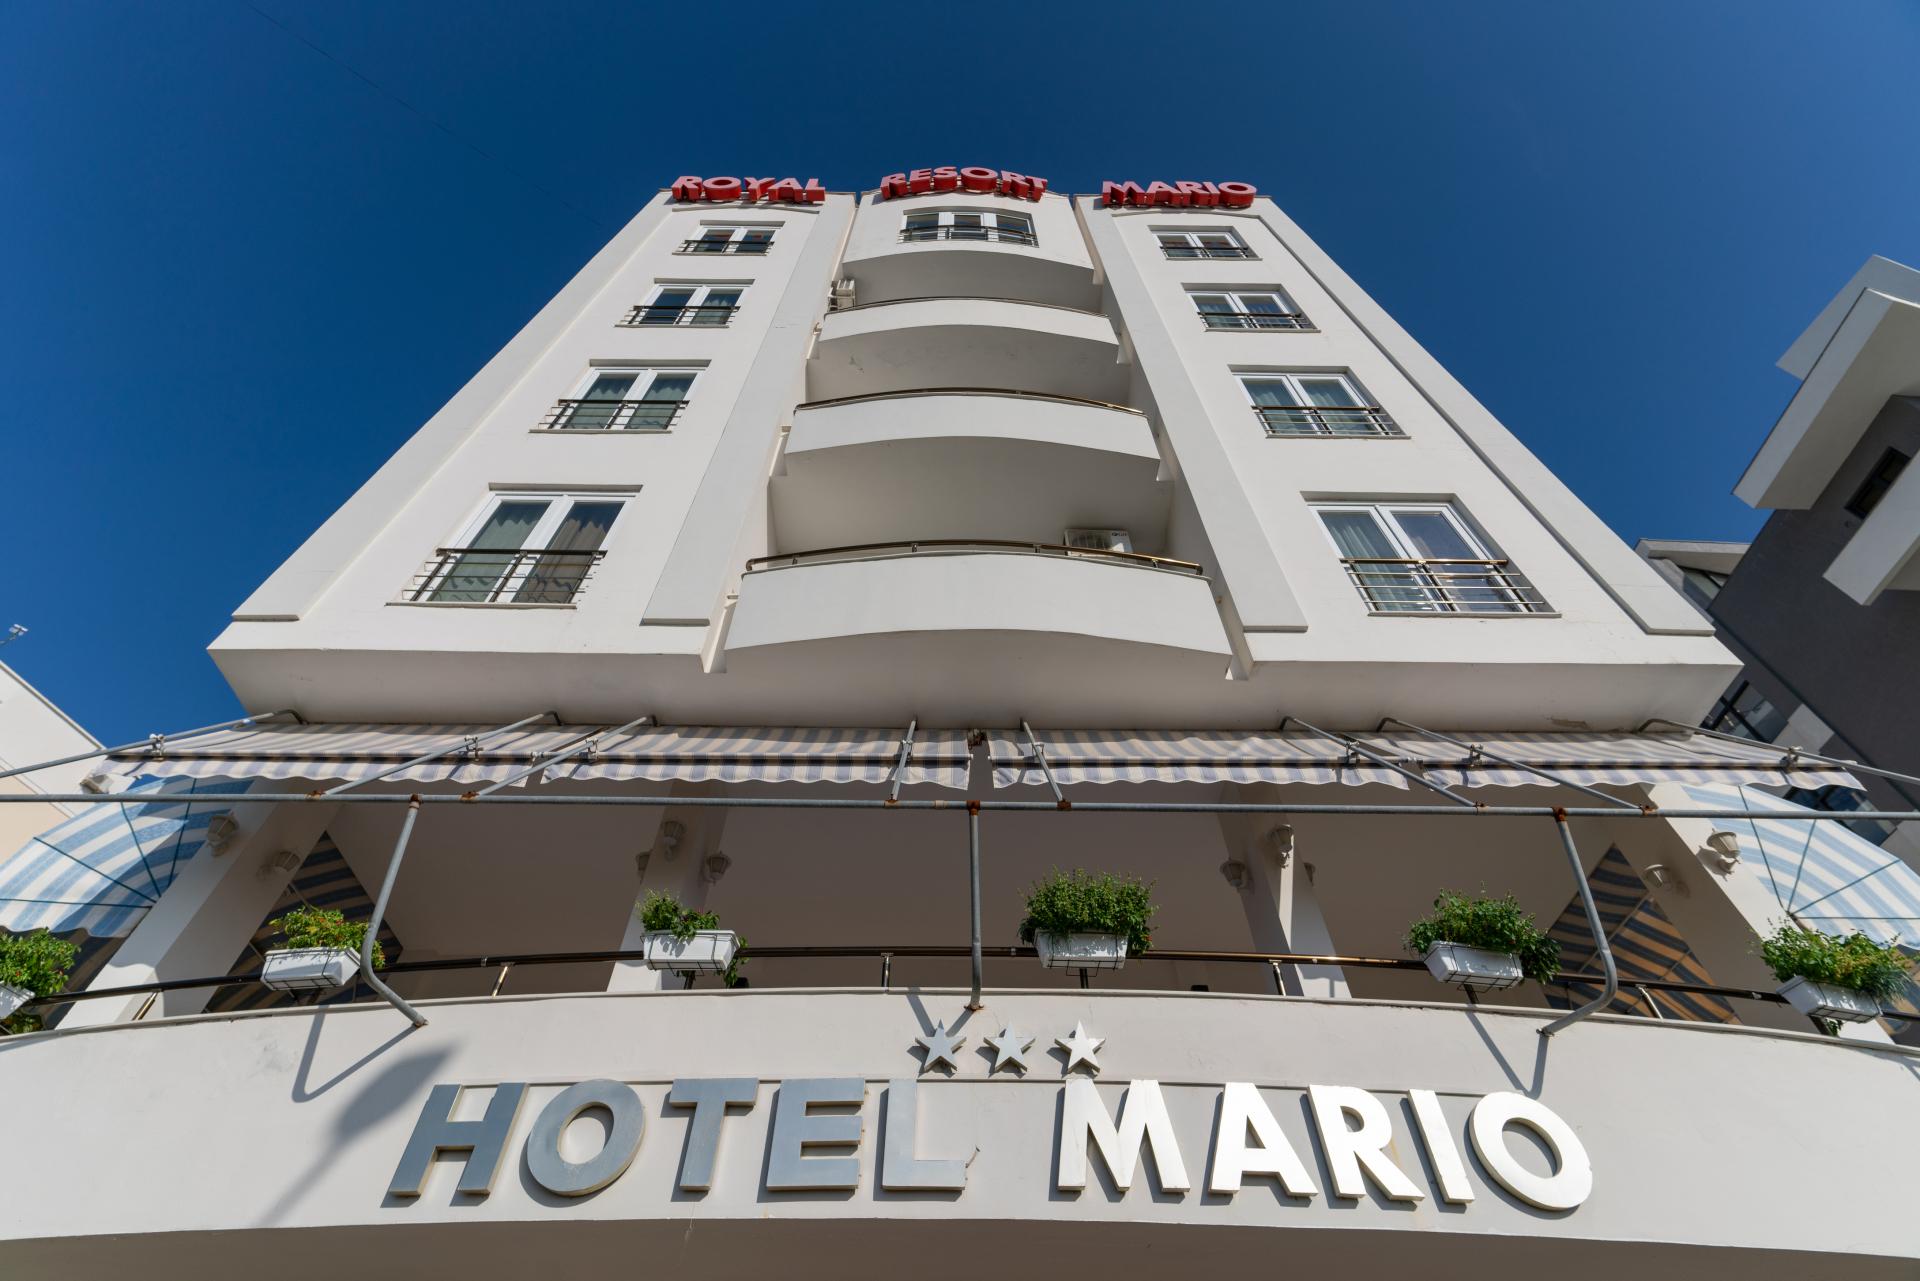 Hotel Mario - Albania